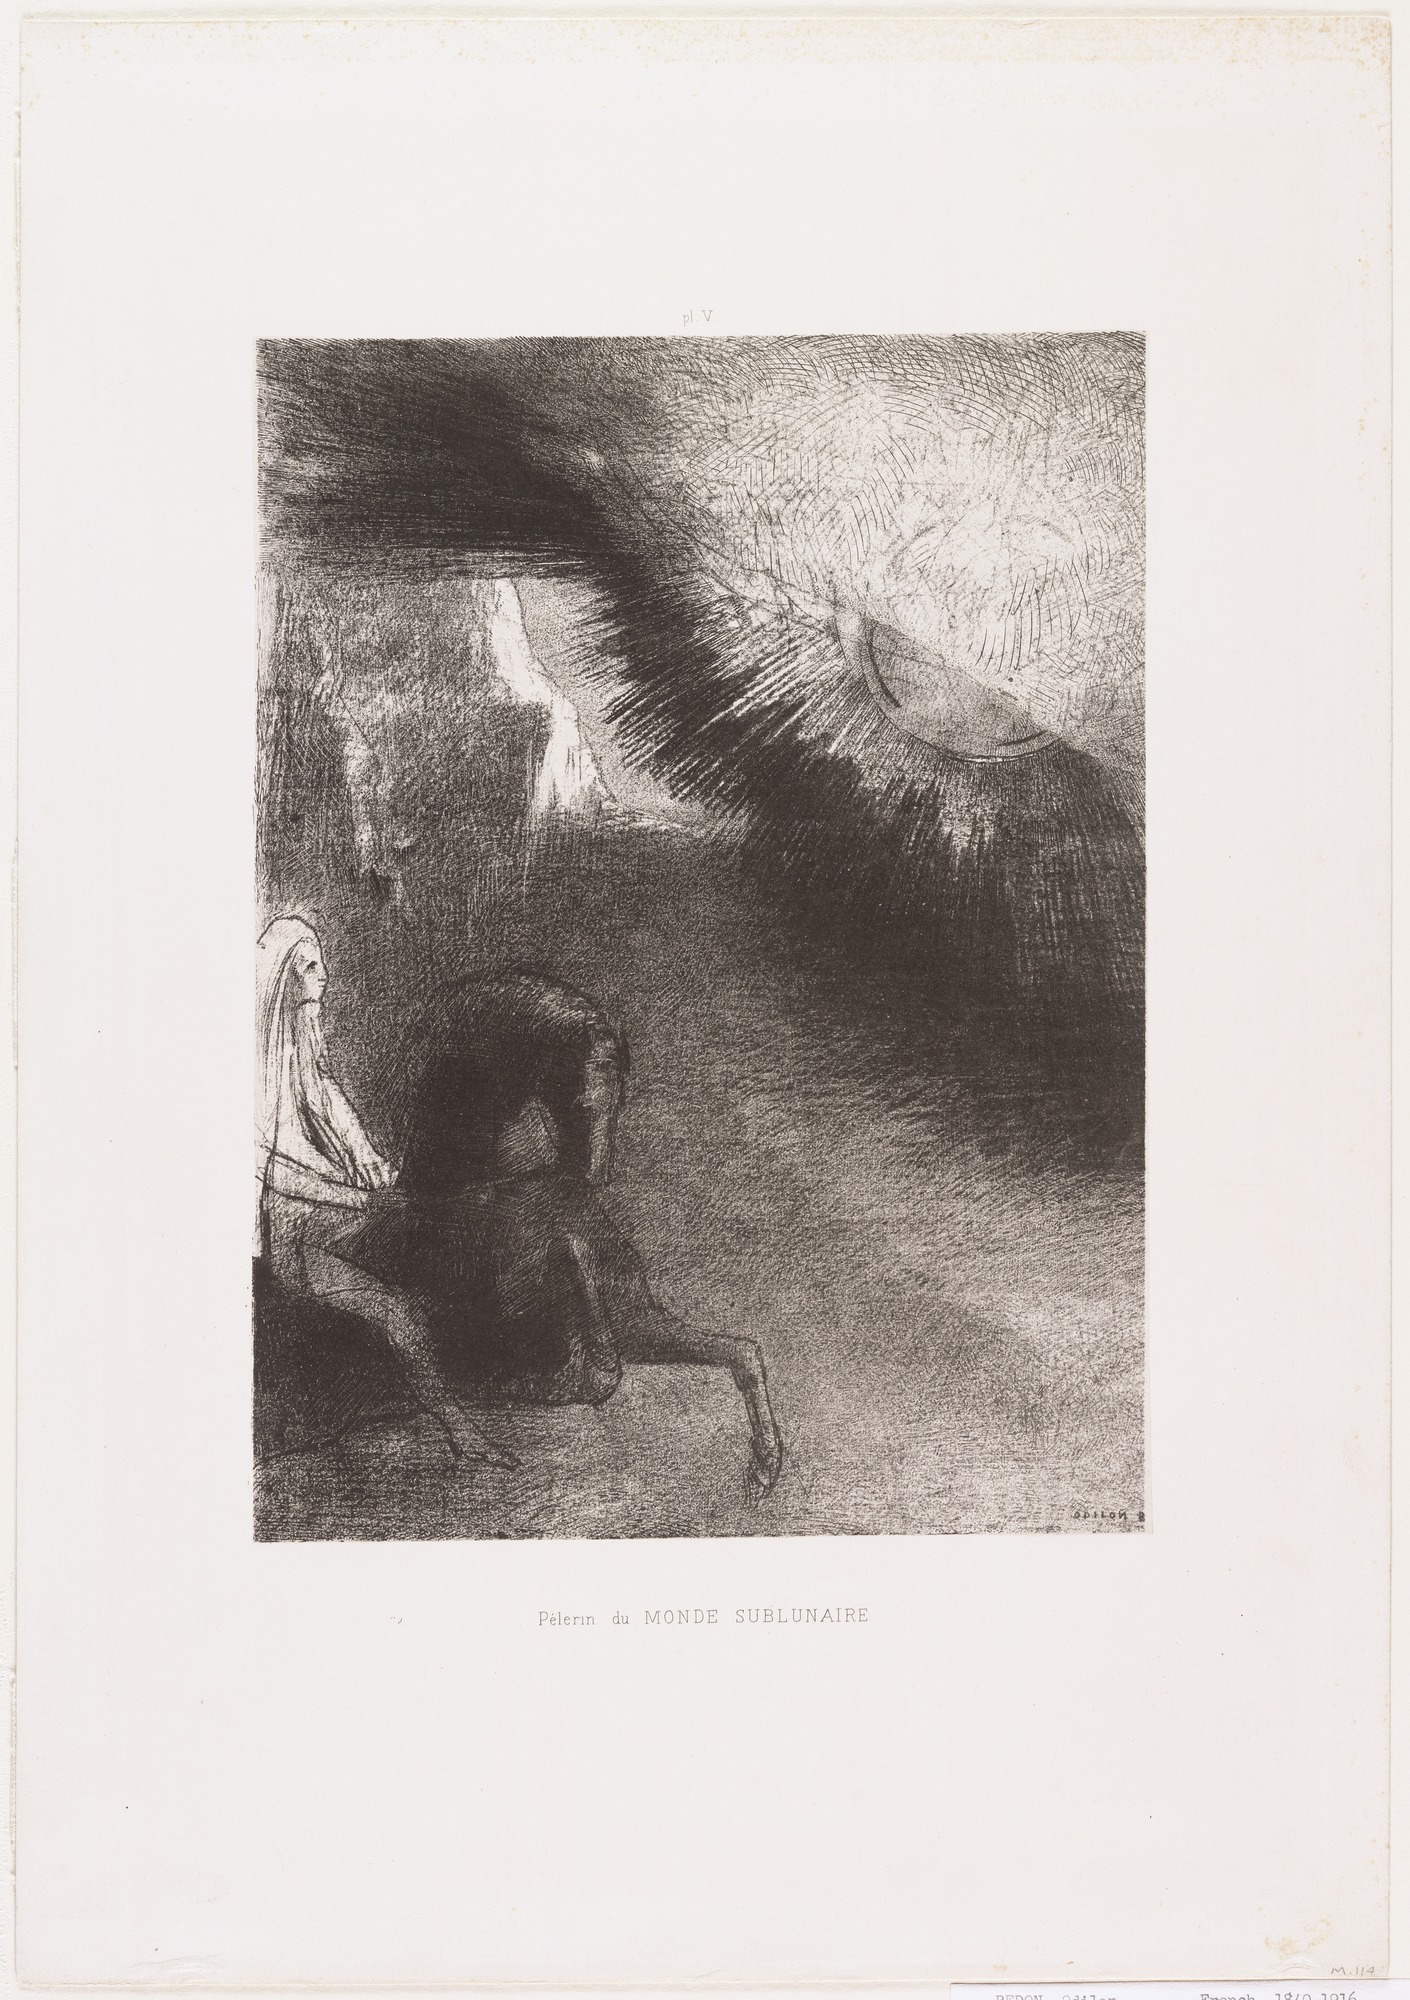 Odilon Redon. Pilgrim of the Sublunary World 1891